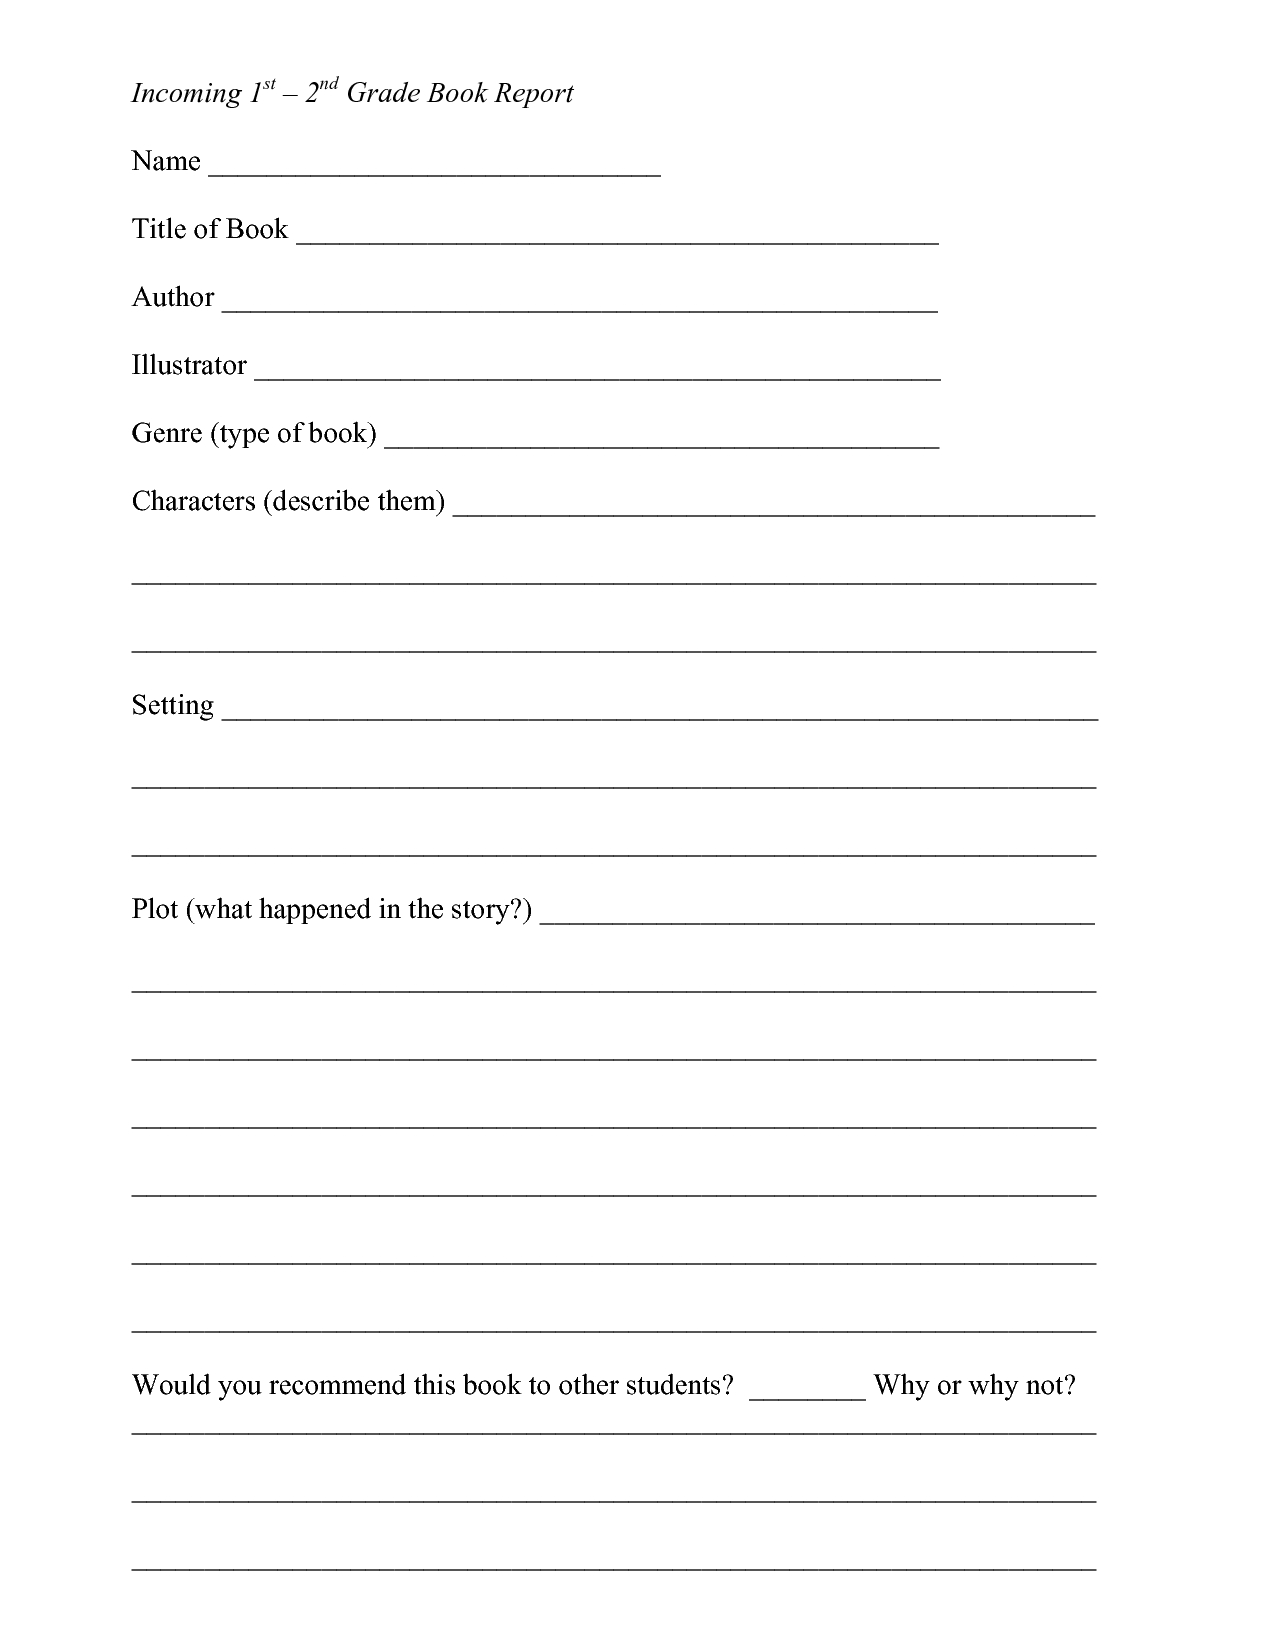 Book Report Template 2Nd Grade Free – Book Report Form Throughout 2Nd Grade Book Report Template